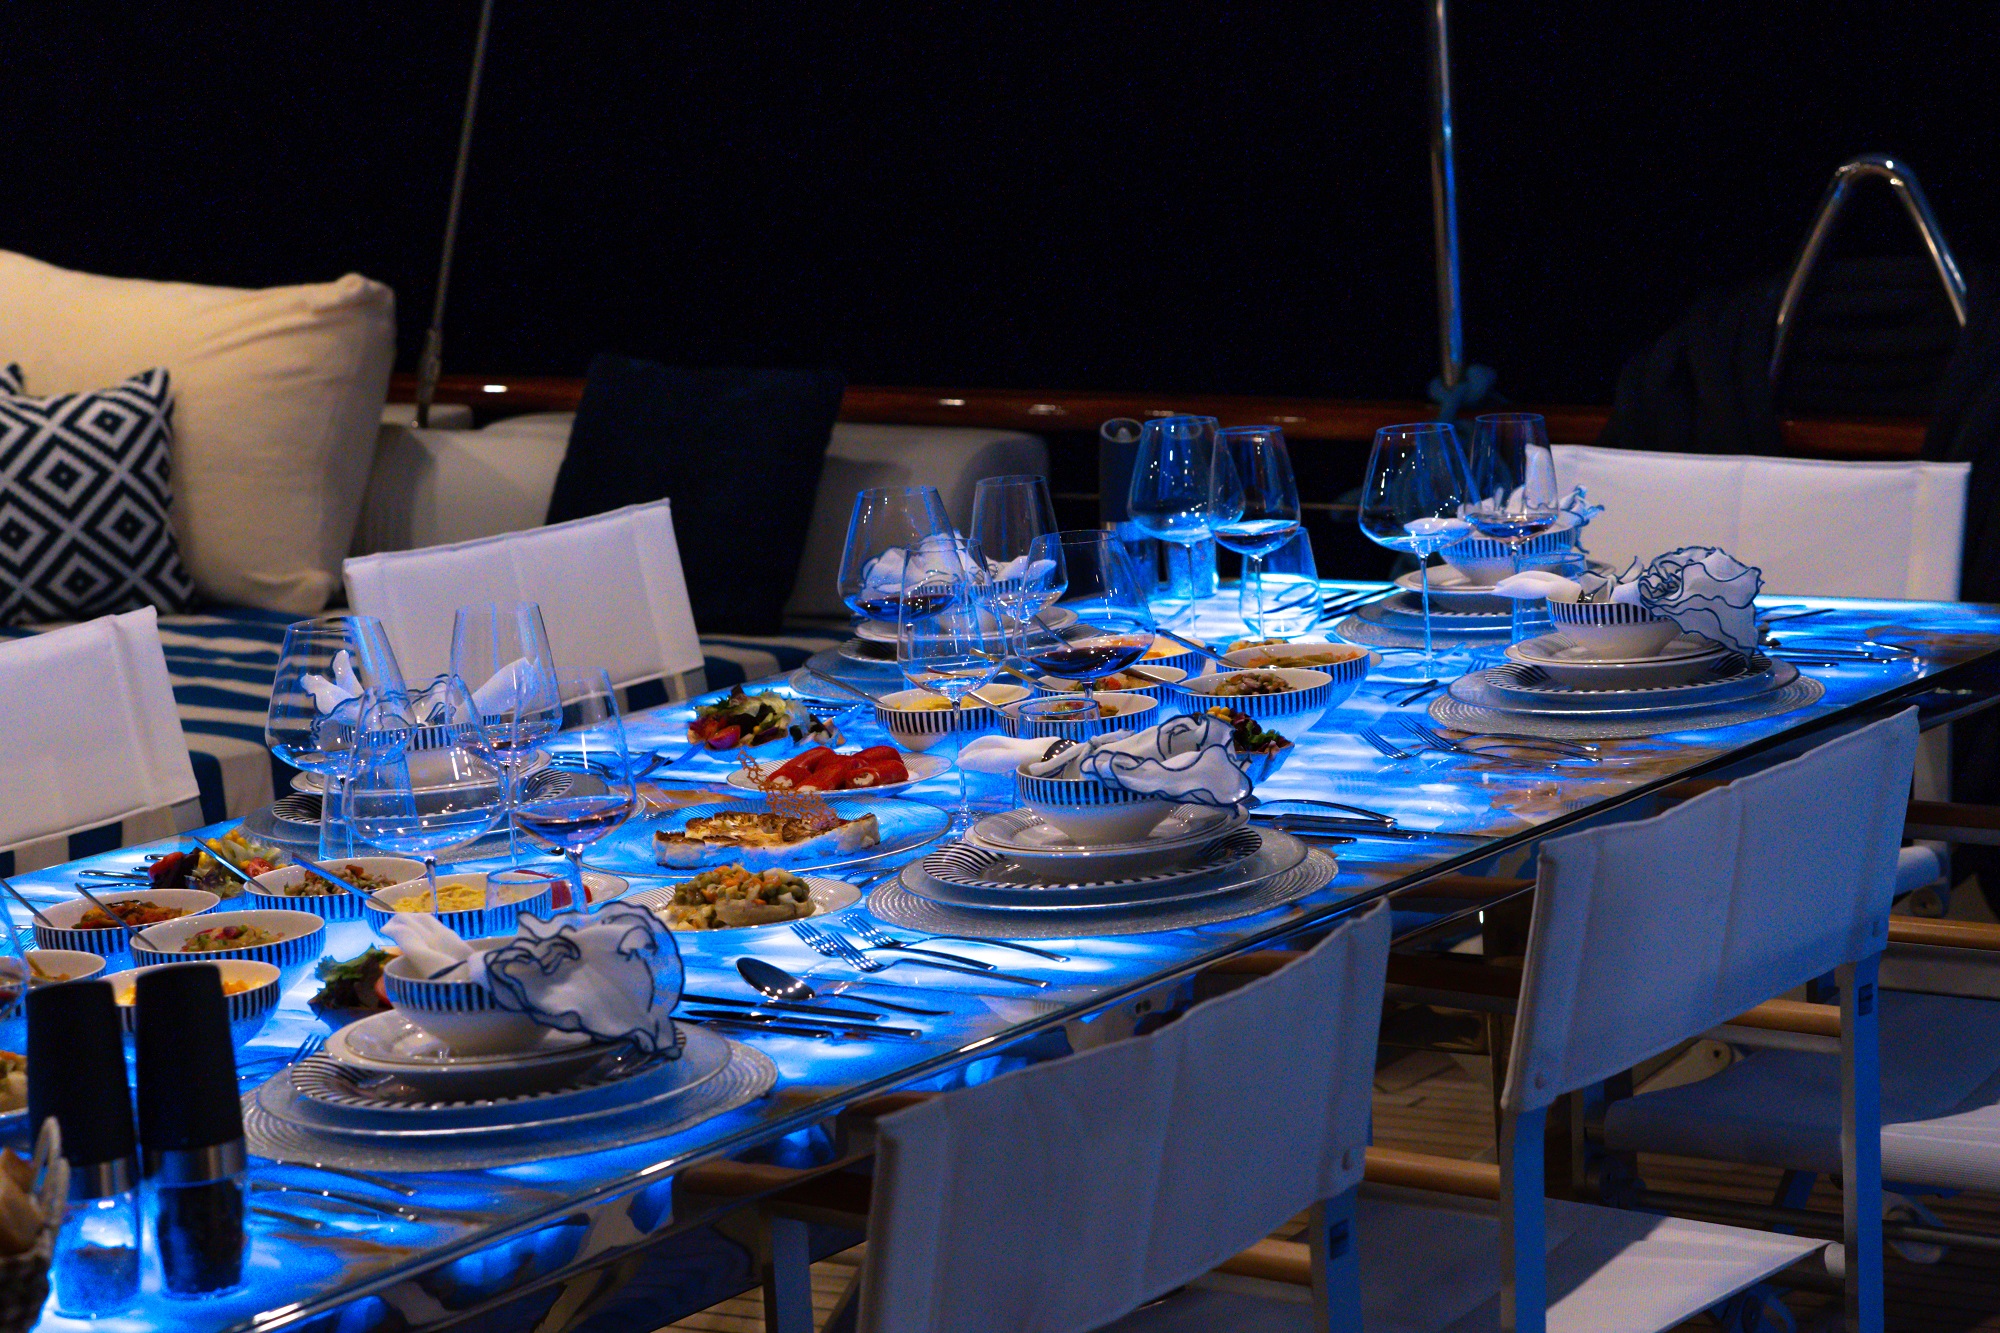 Al Fresco Dining - Illuminated Table At Night